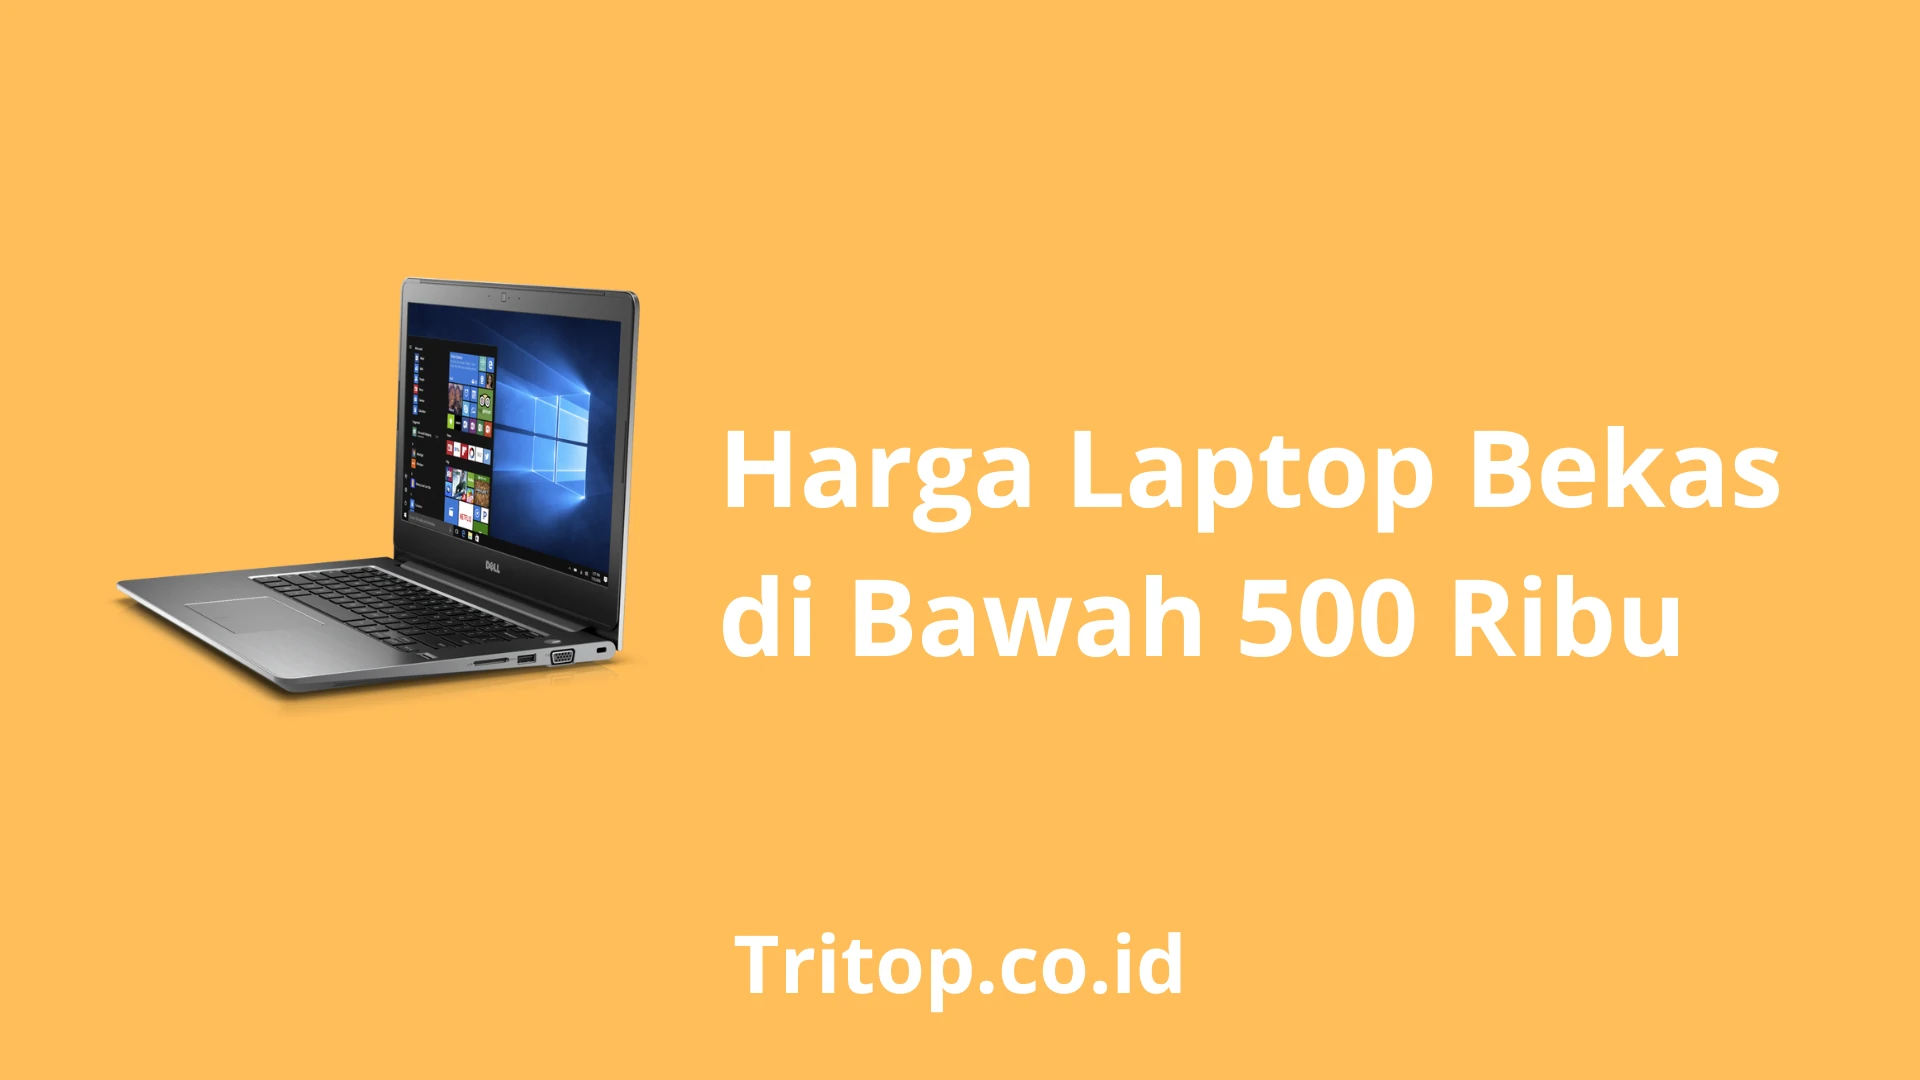 Harga Laptop Bekas di Bawah 500 Ribu Tritop.co.id